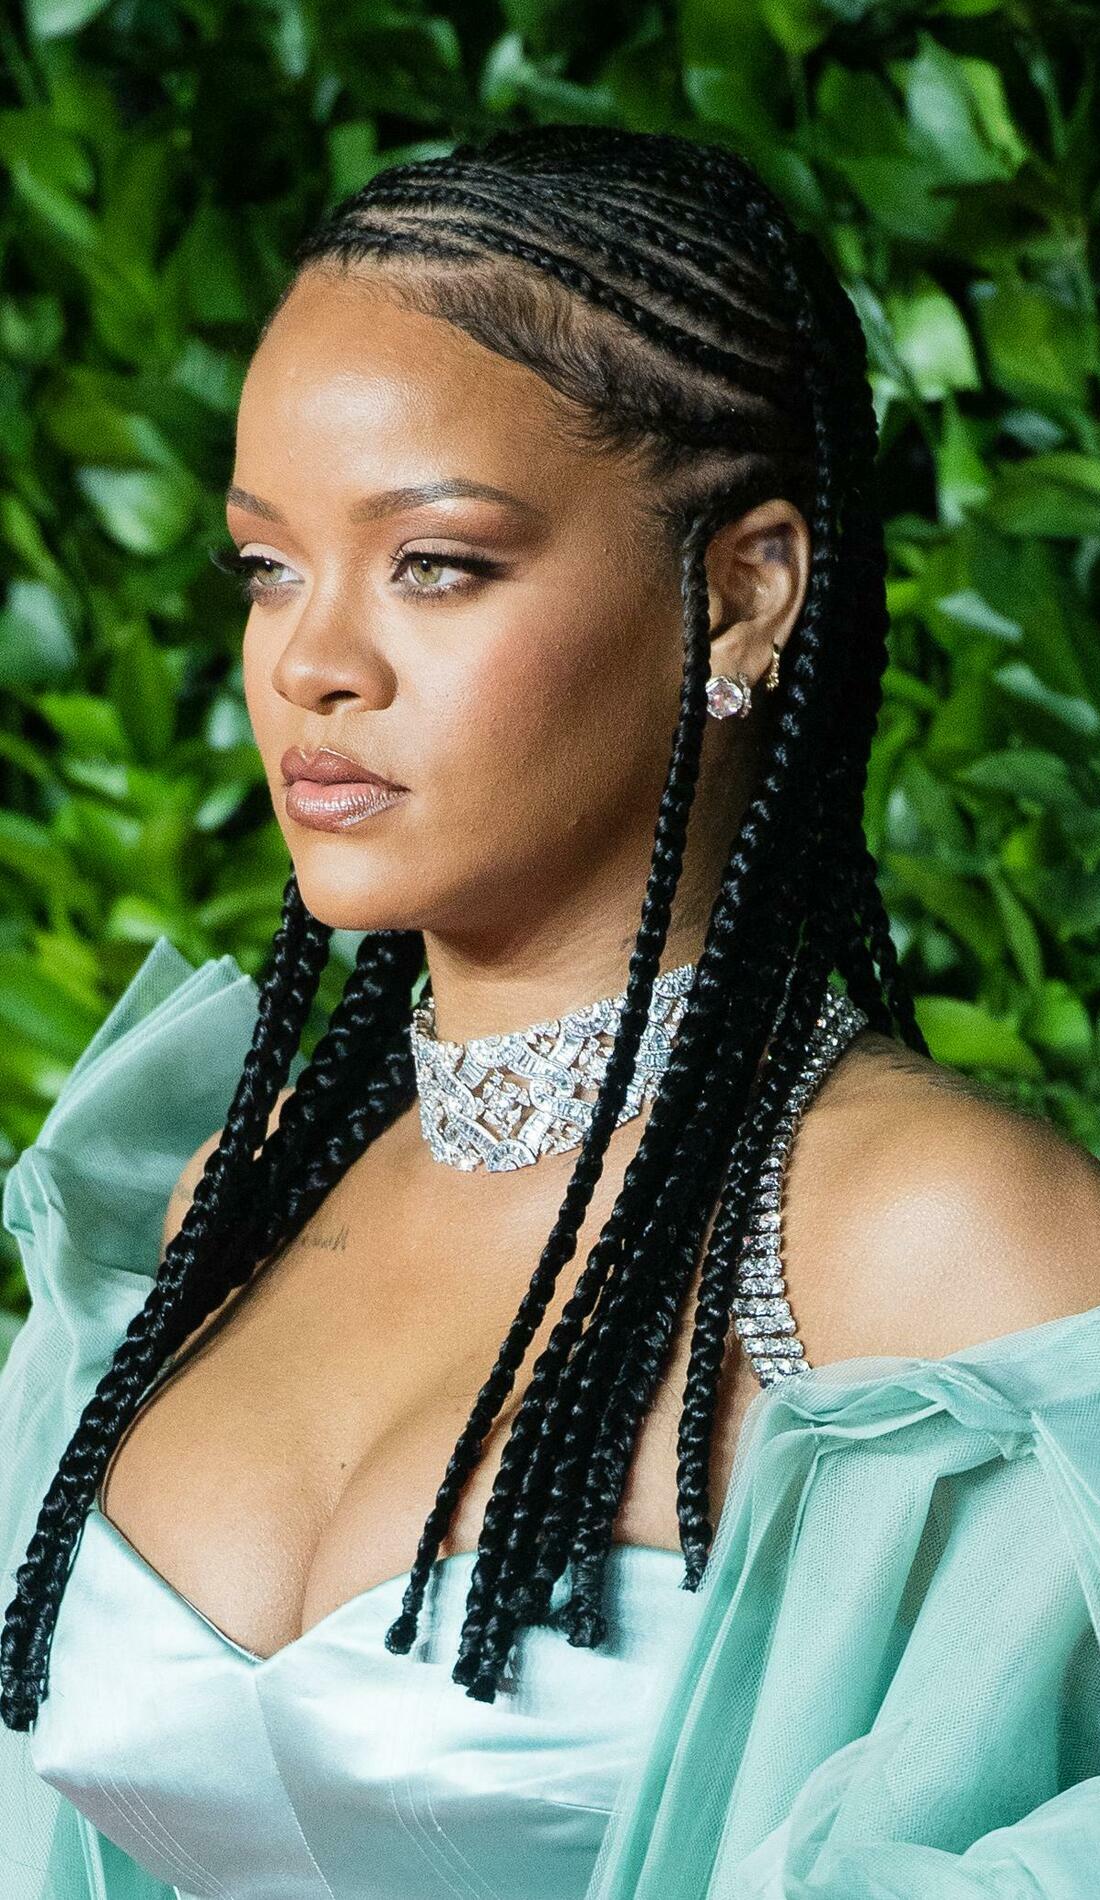 A Rihanna live event